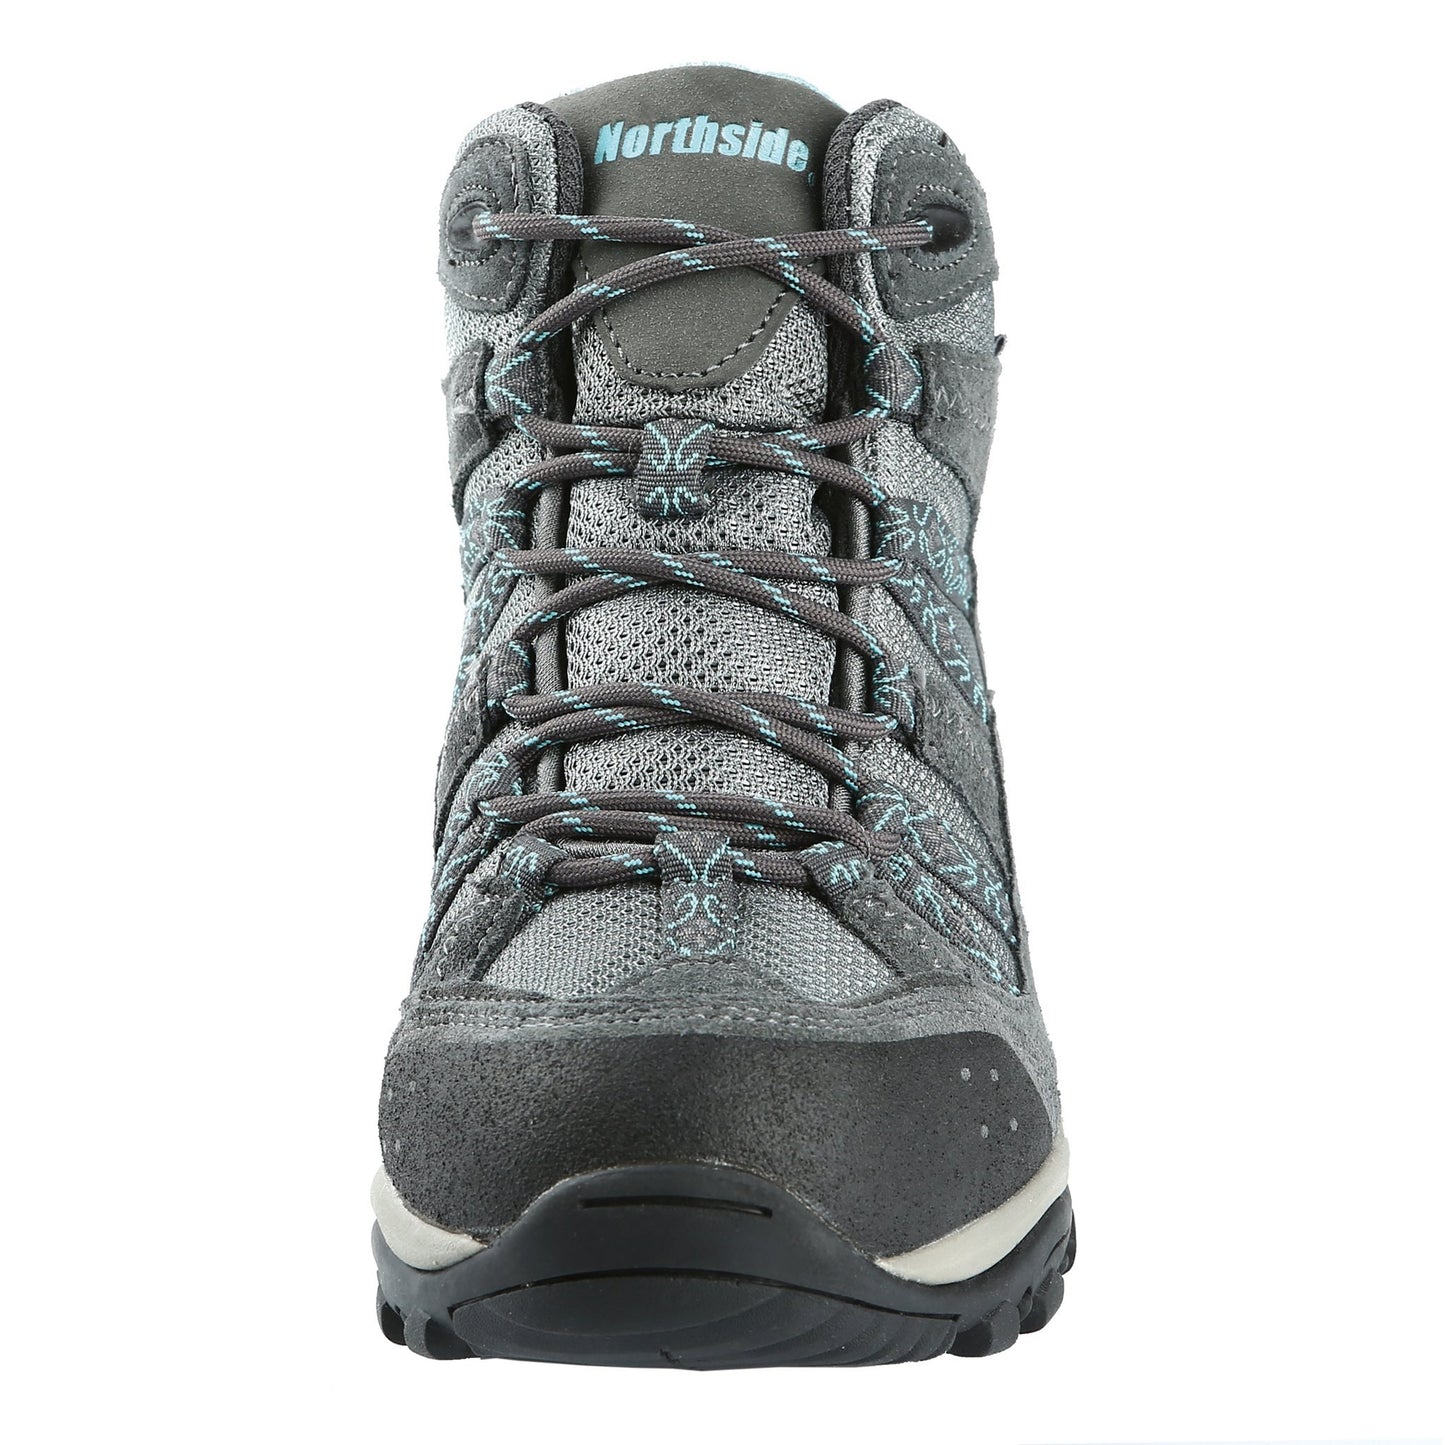 Northside Womens Freemont Waterproof Hiking Boot - Gray/Aqua